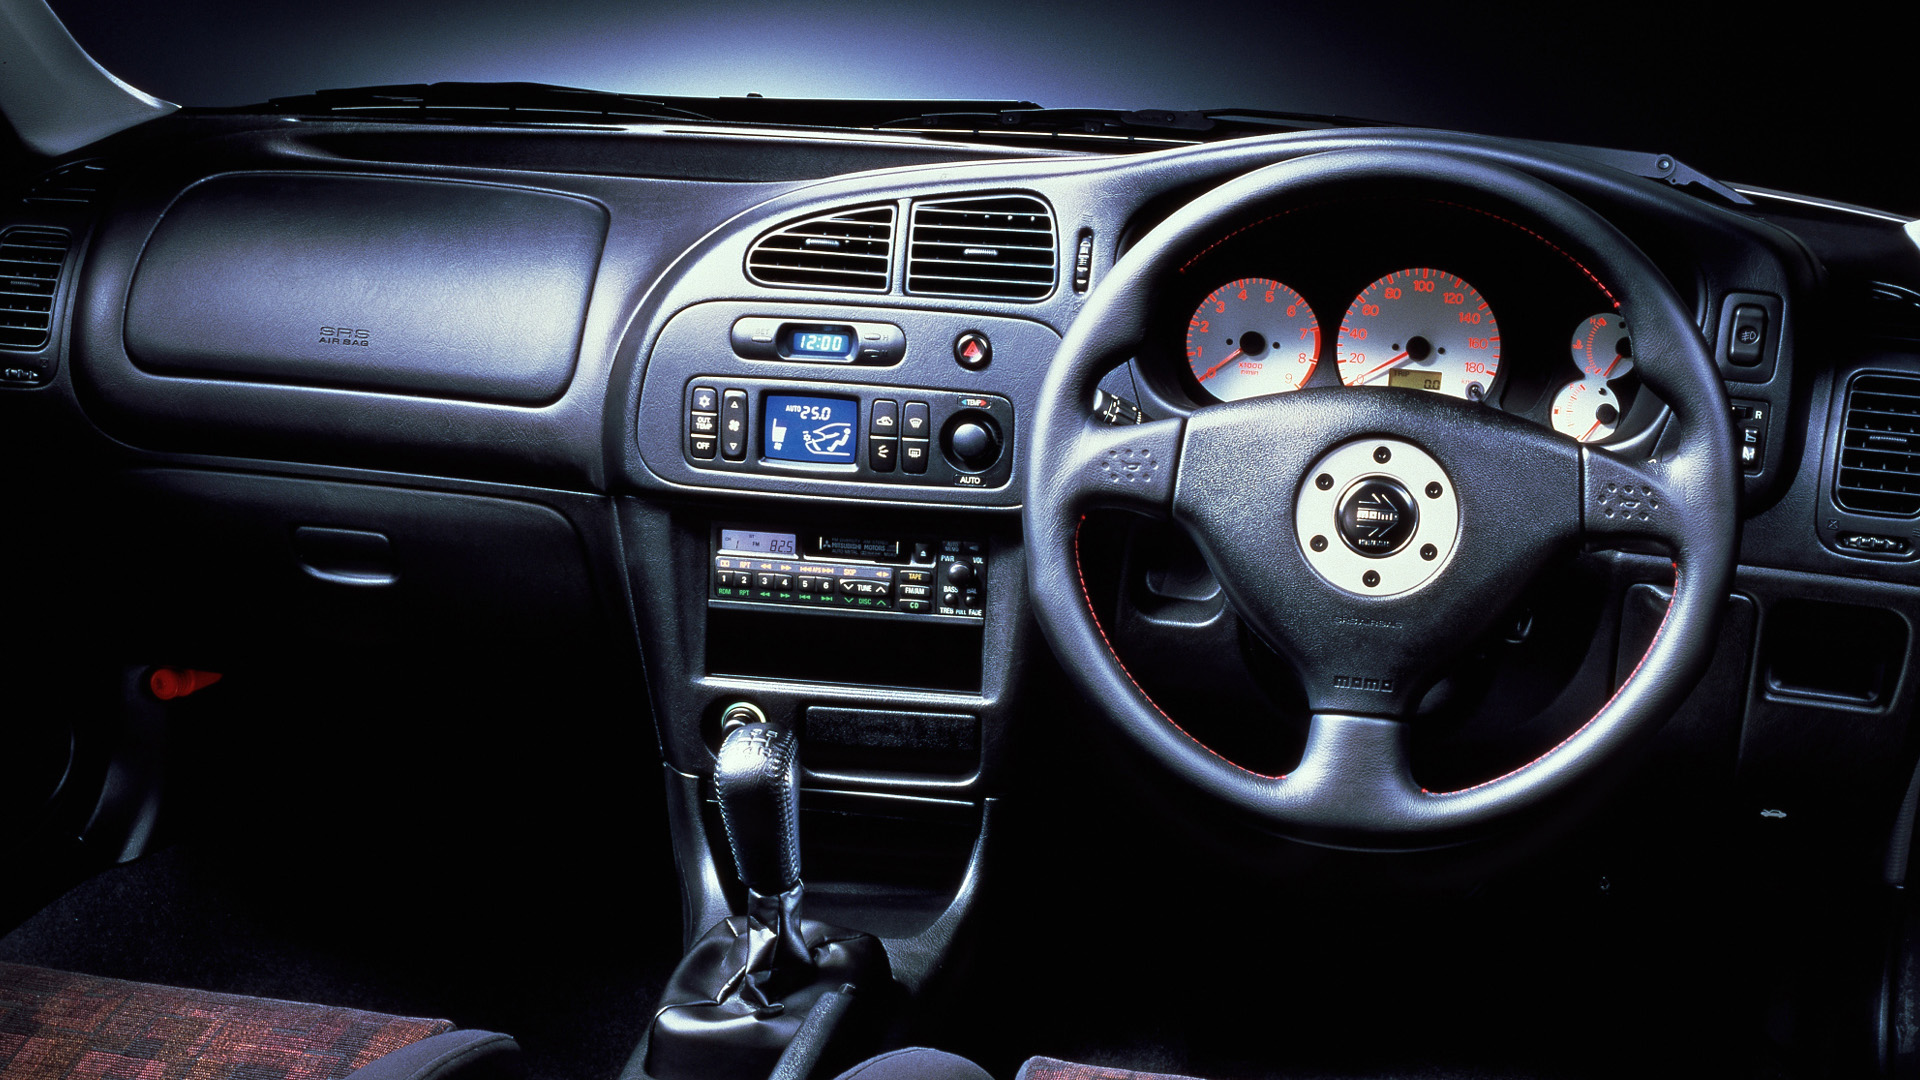  1996 Mitsubishi Lancer GSR Evolution IV Wallpaper.